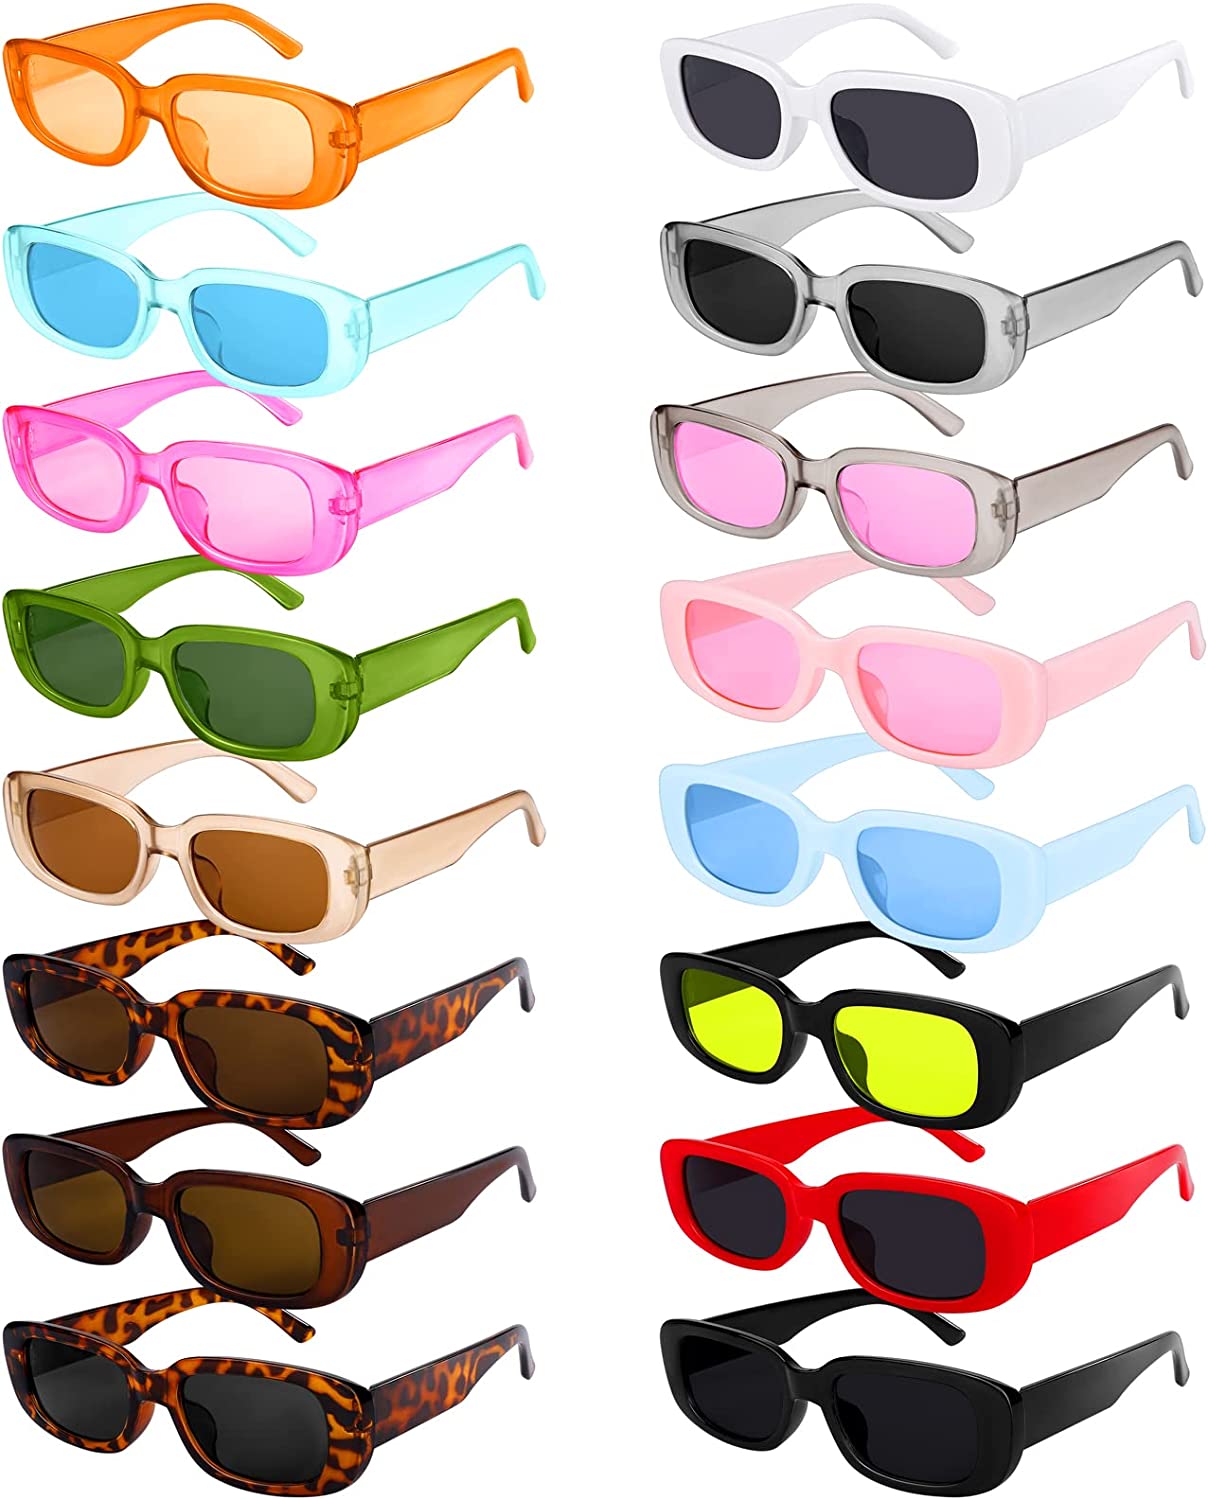 URATOT Small Rectangle Sunglasses Women Retro Glasses Vintage Square Eyewear Wide Frame Sunglasses with Storage Bag